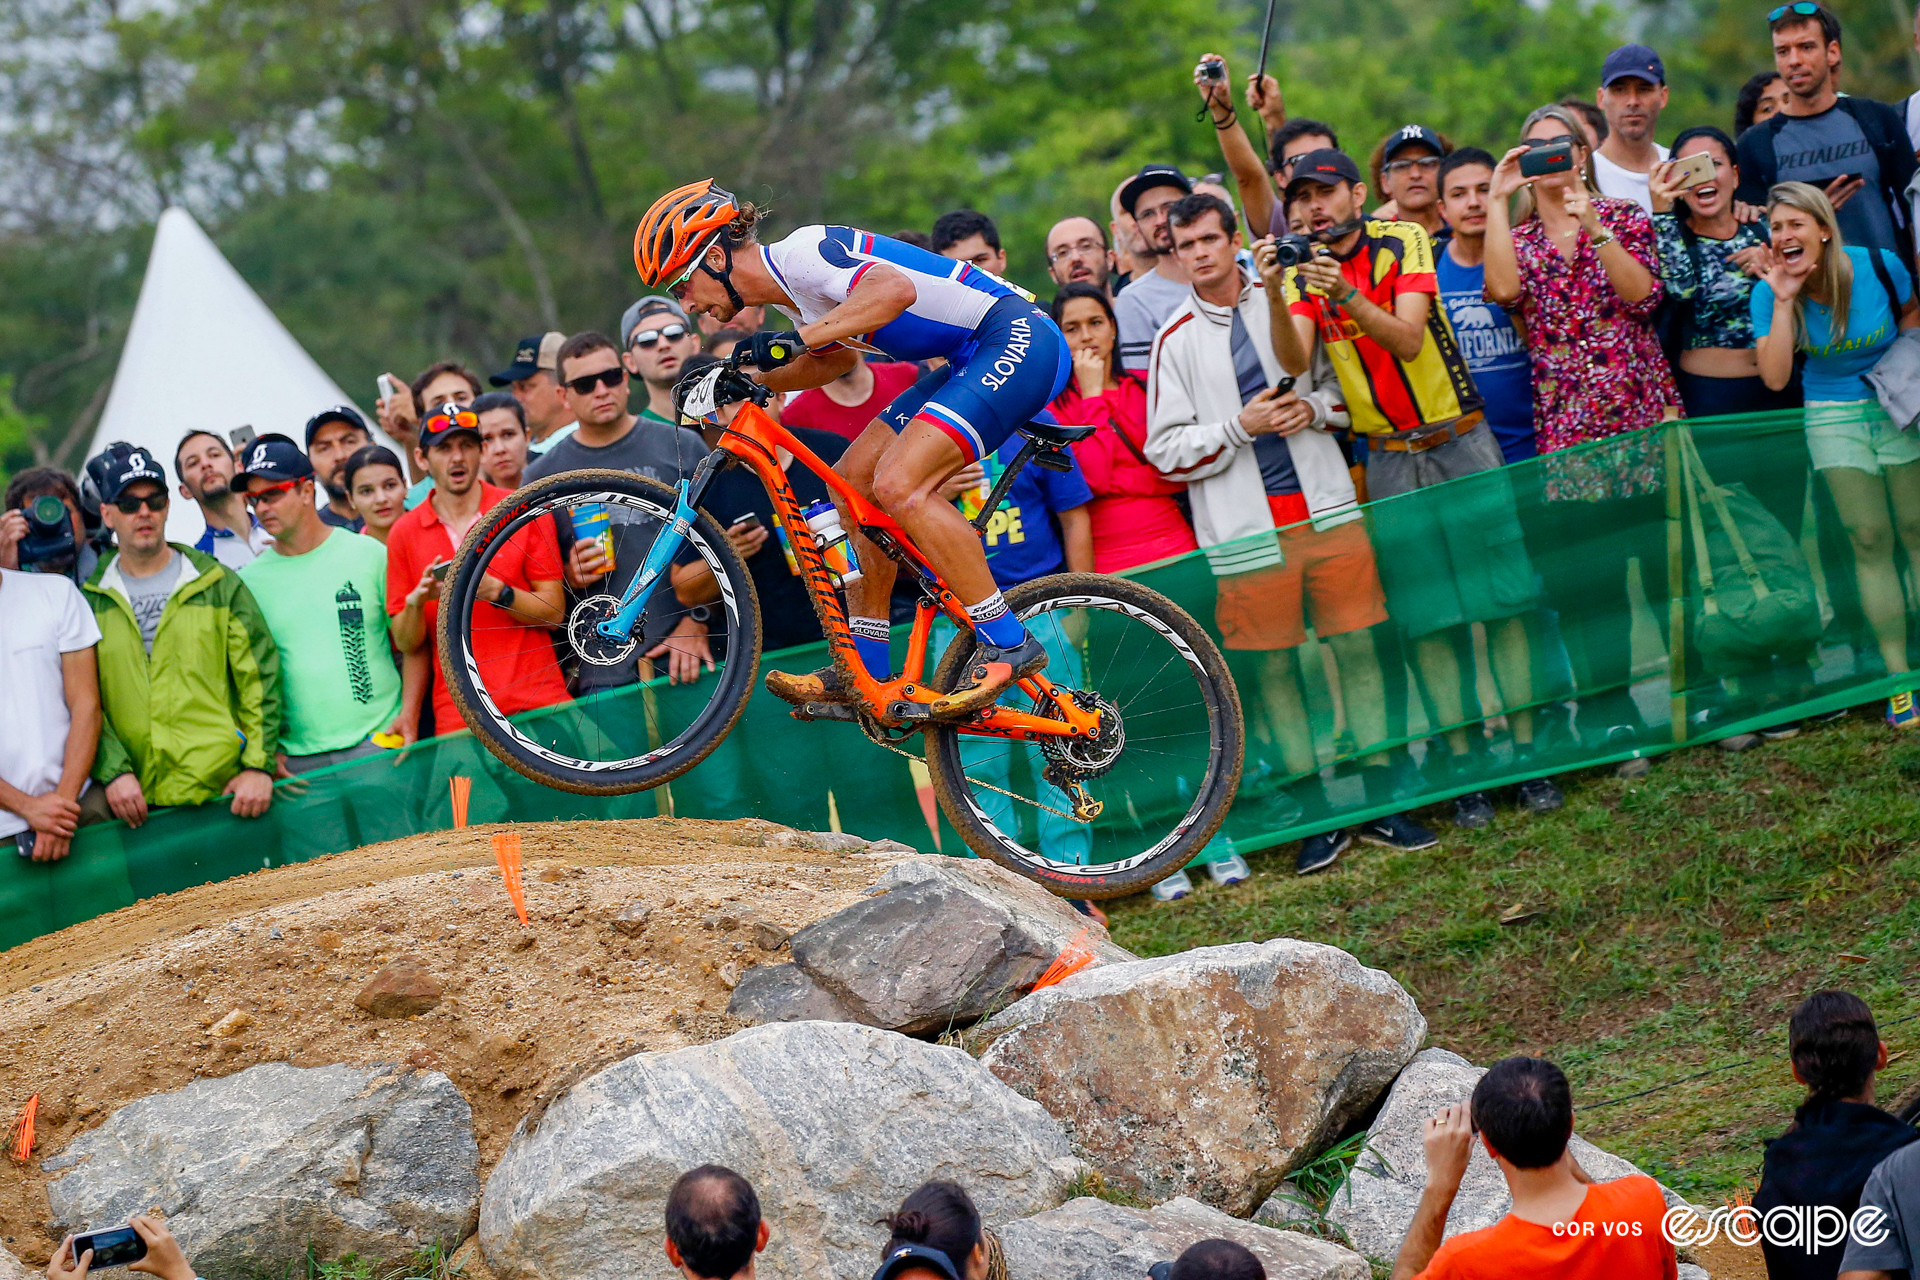 Peter Sagan racing his mountain bike over some rocks at the 2016 Rio Olympics.